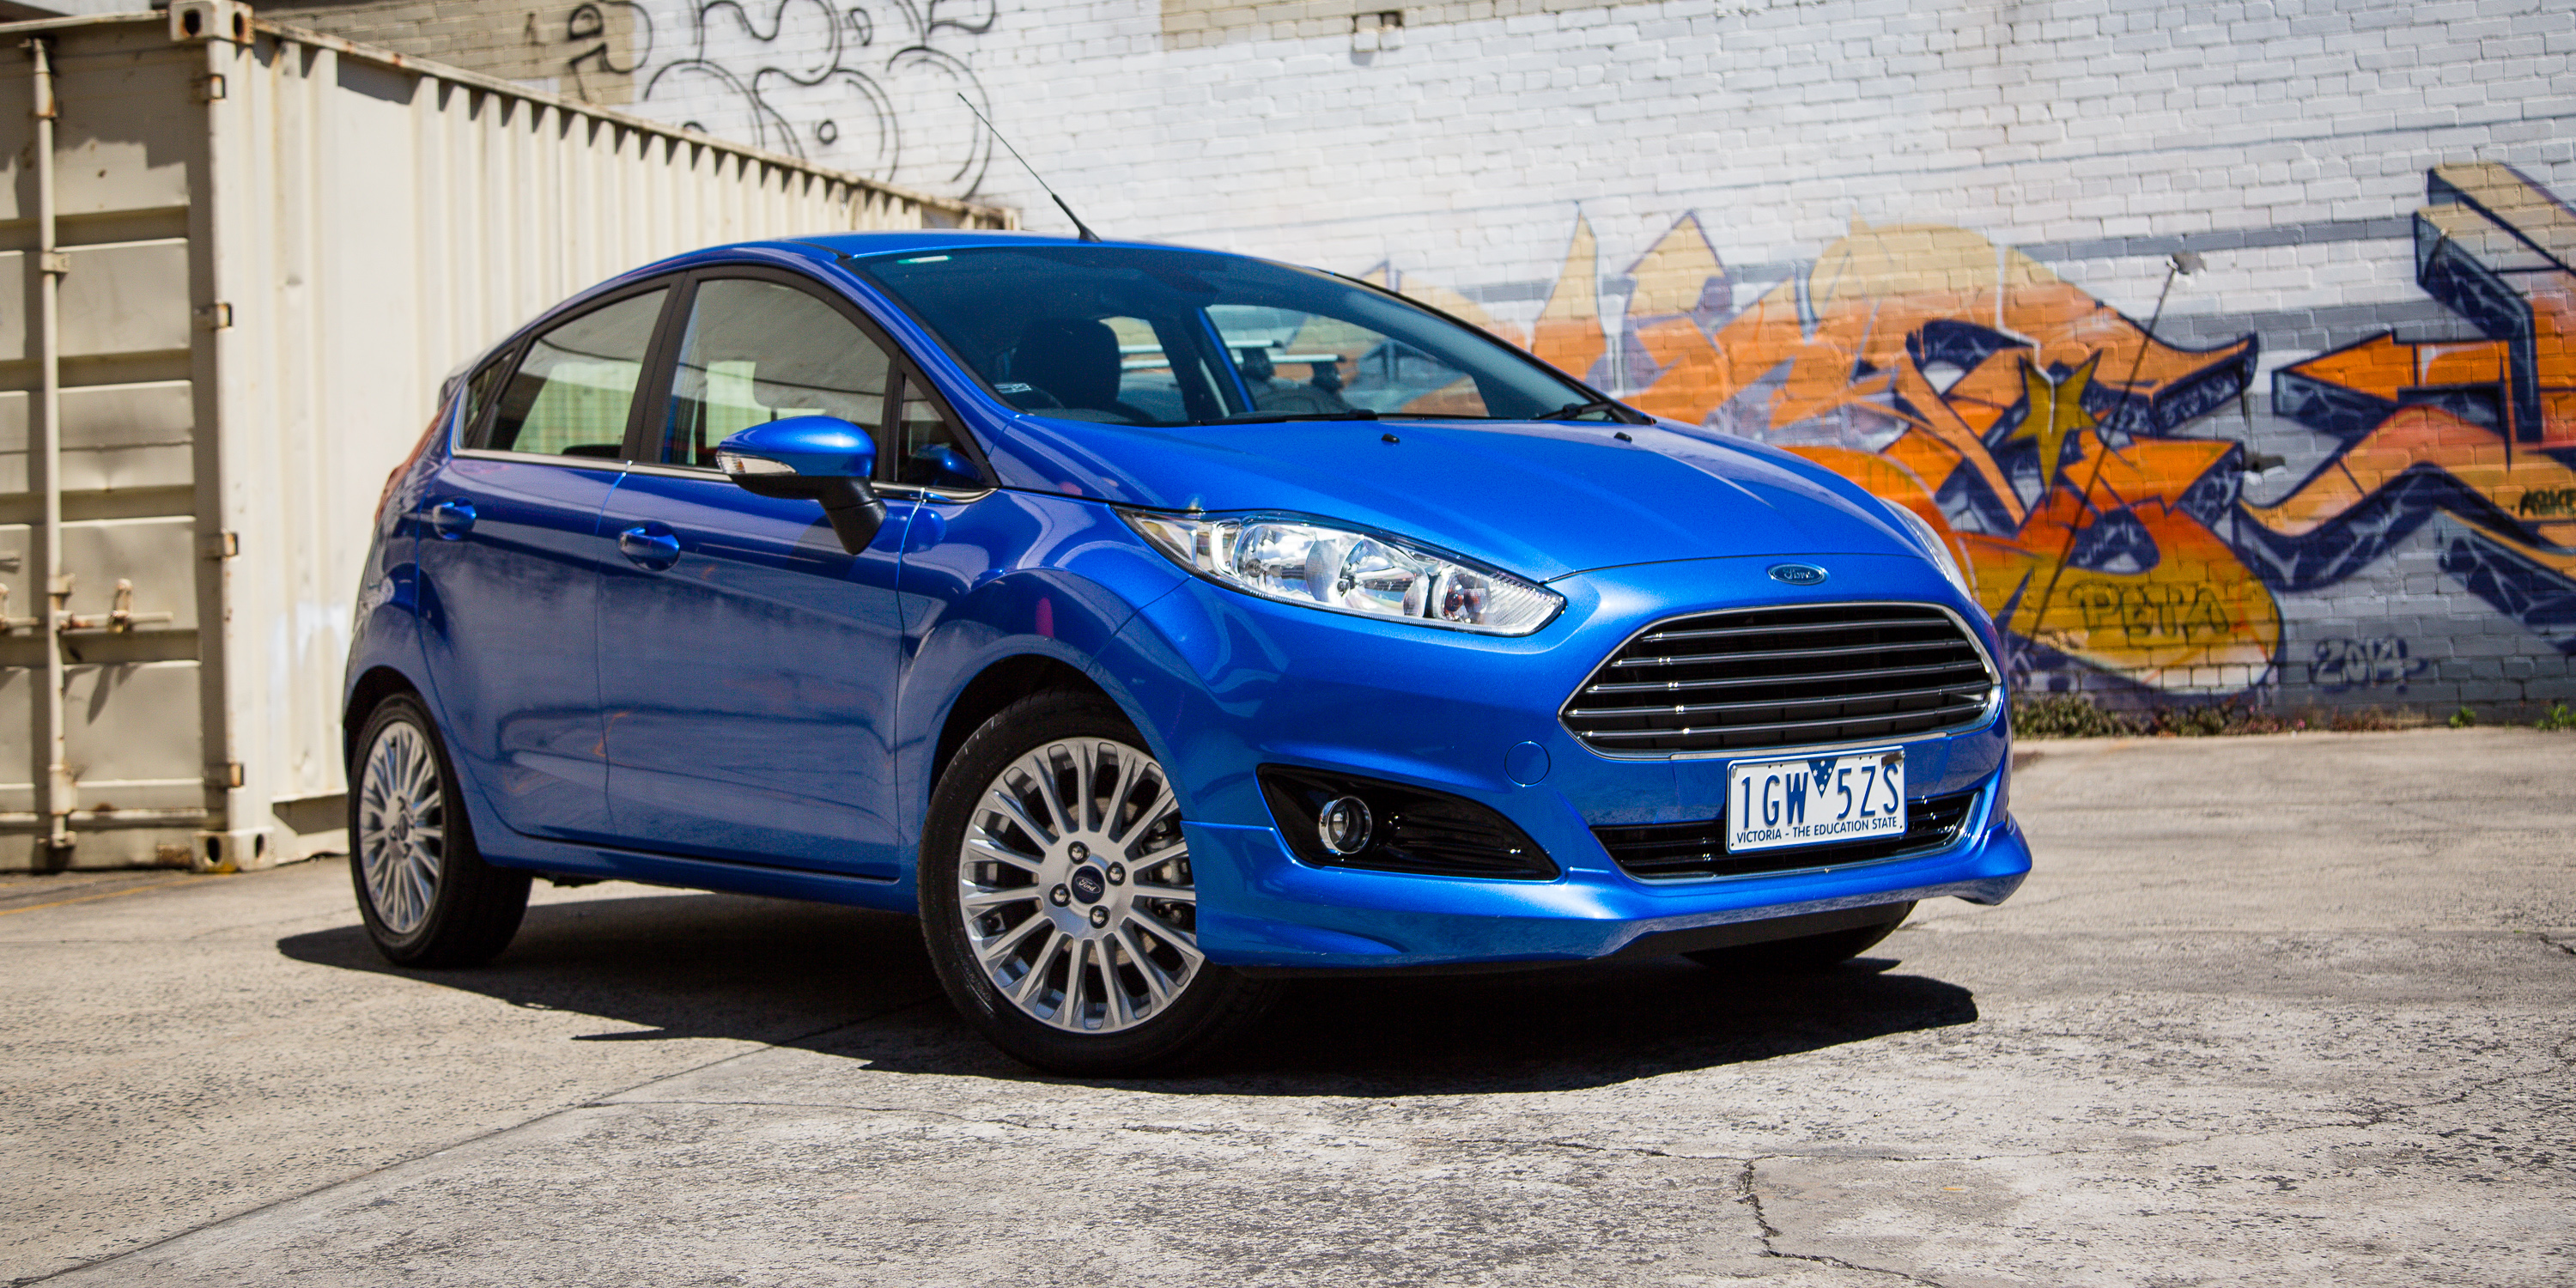 Ford Fiesta’s future in Australia unclear, Focus cloudy ...